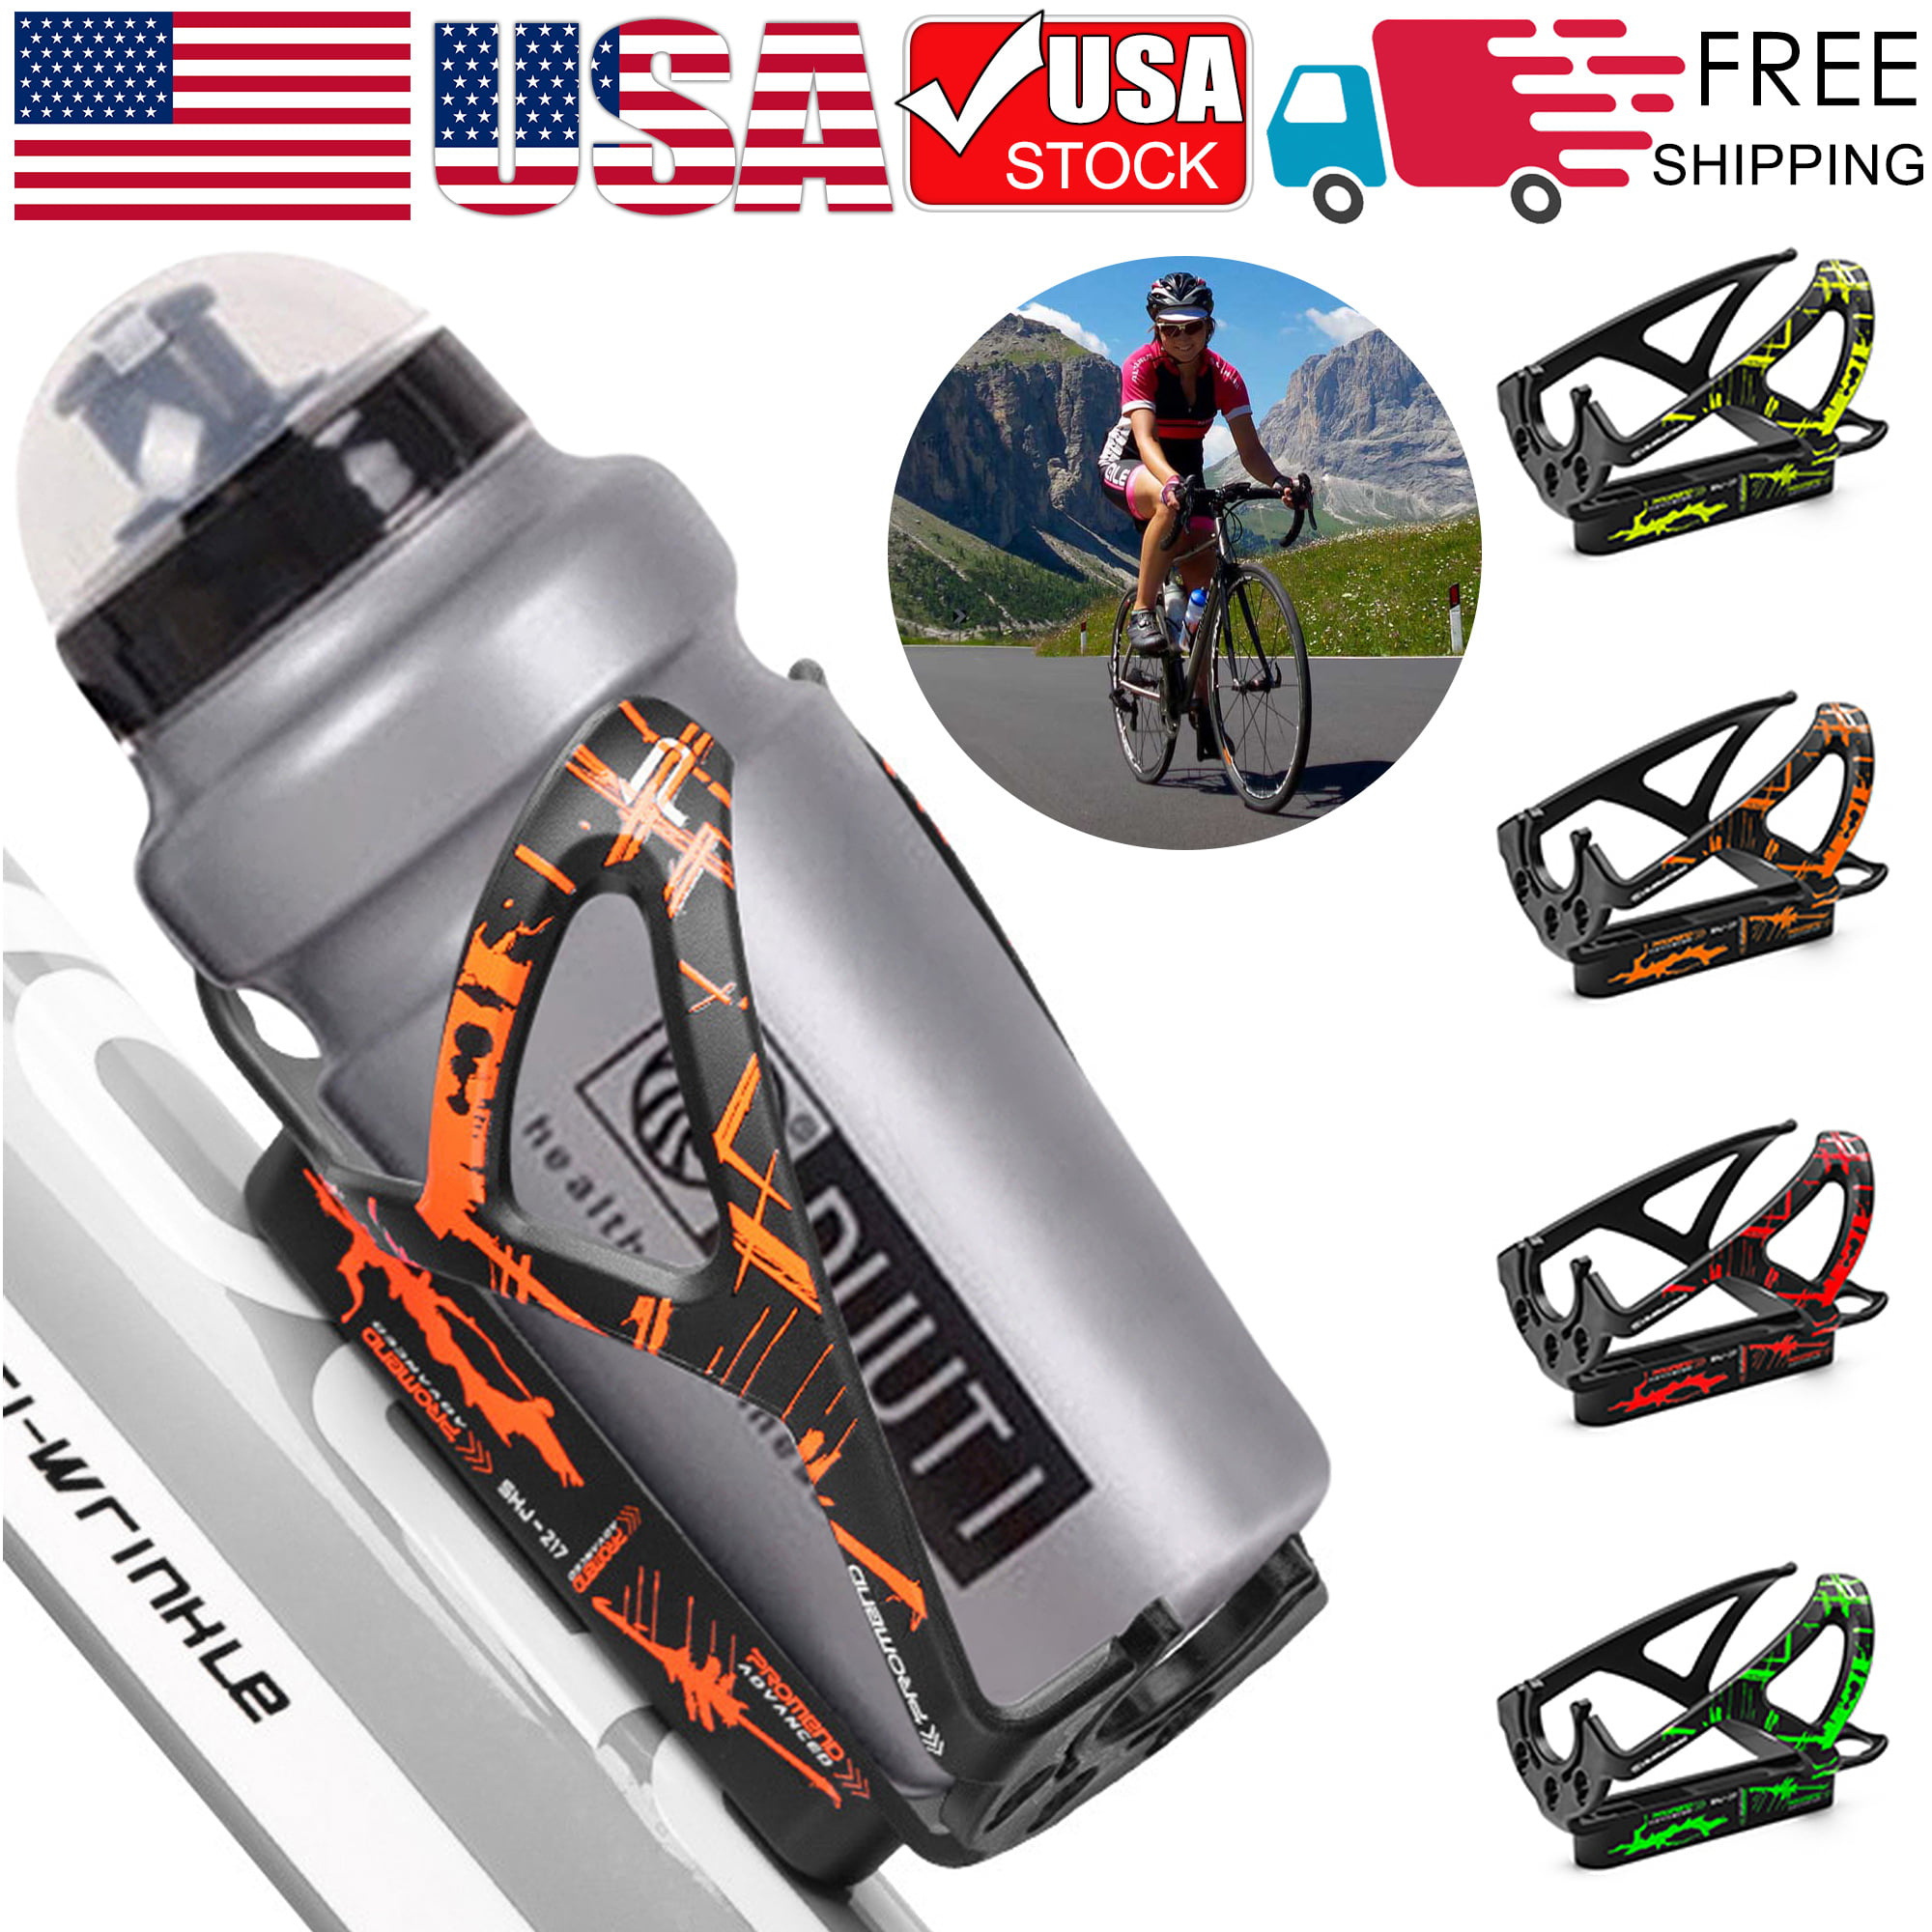 Bike Bicycle Bottle Holder Adjustable Mountain Bike Water Bottle Cage Drink Rack